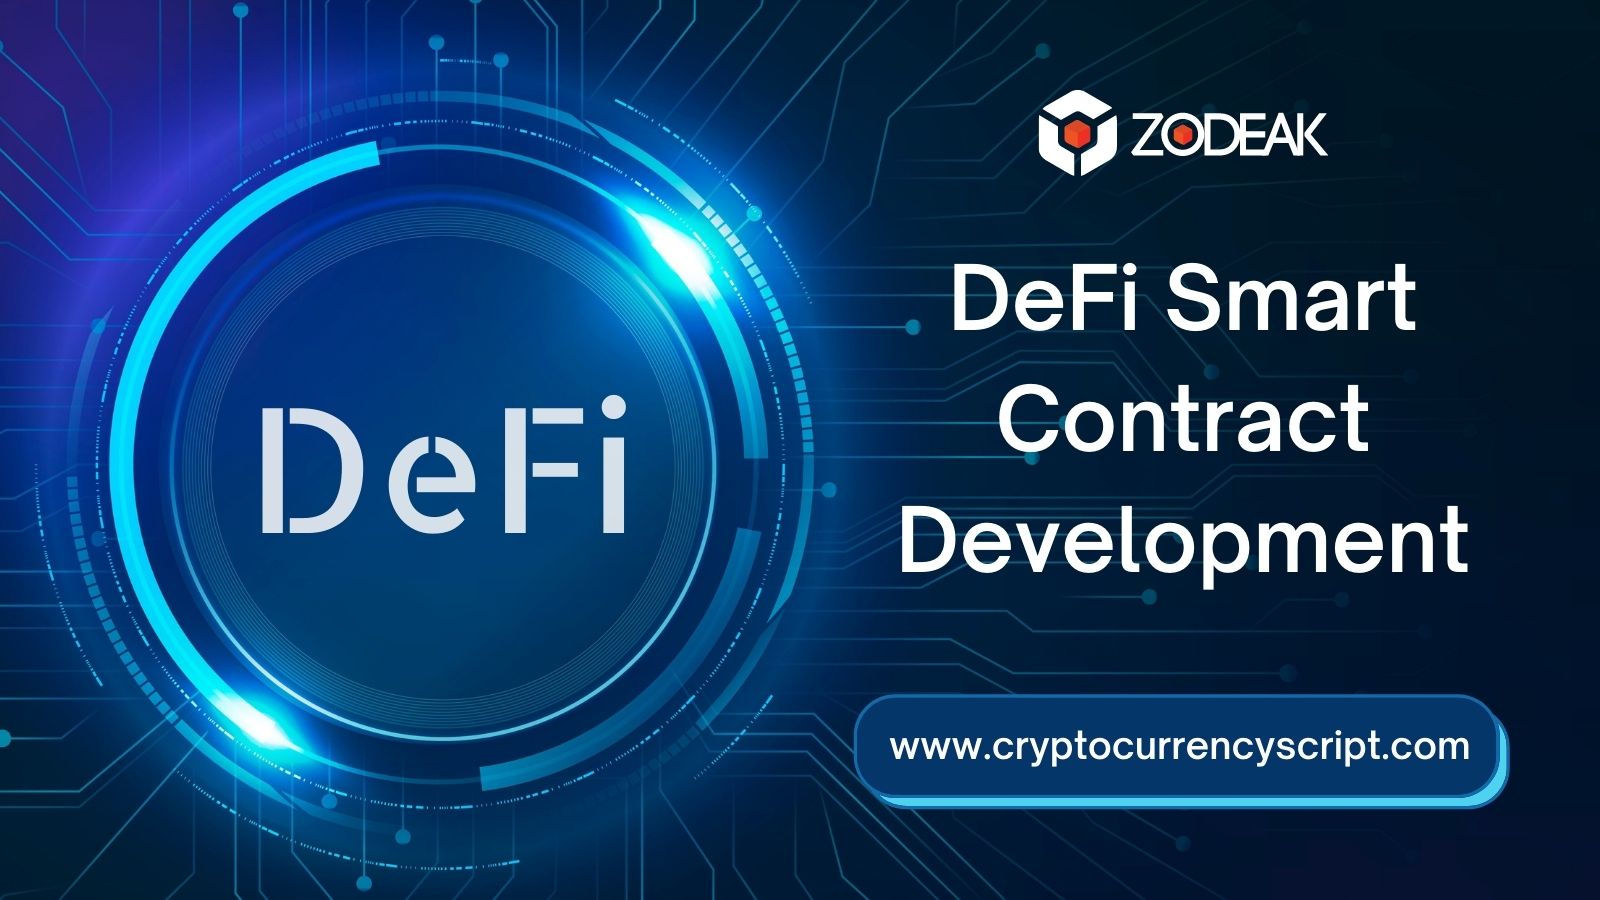 DeFi Smart Contract Development Services